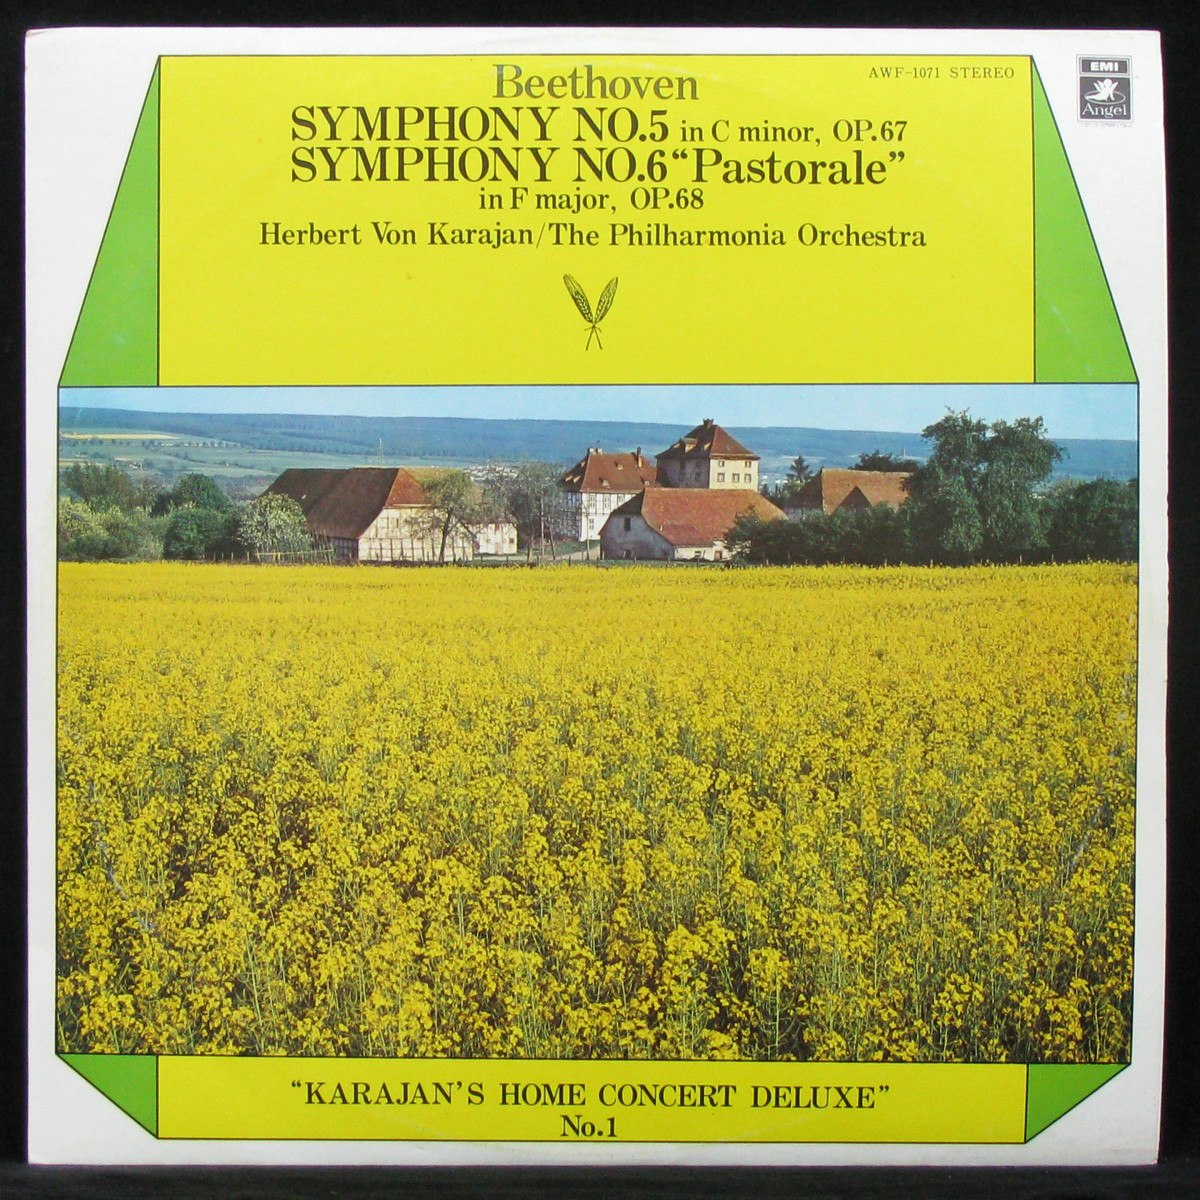 Beethoven. Karajan's Home Concert Deluse No. 1